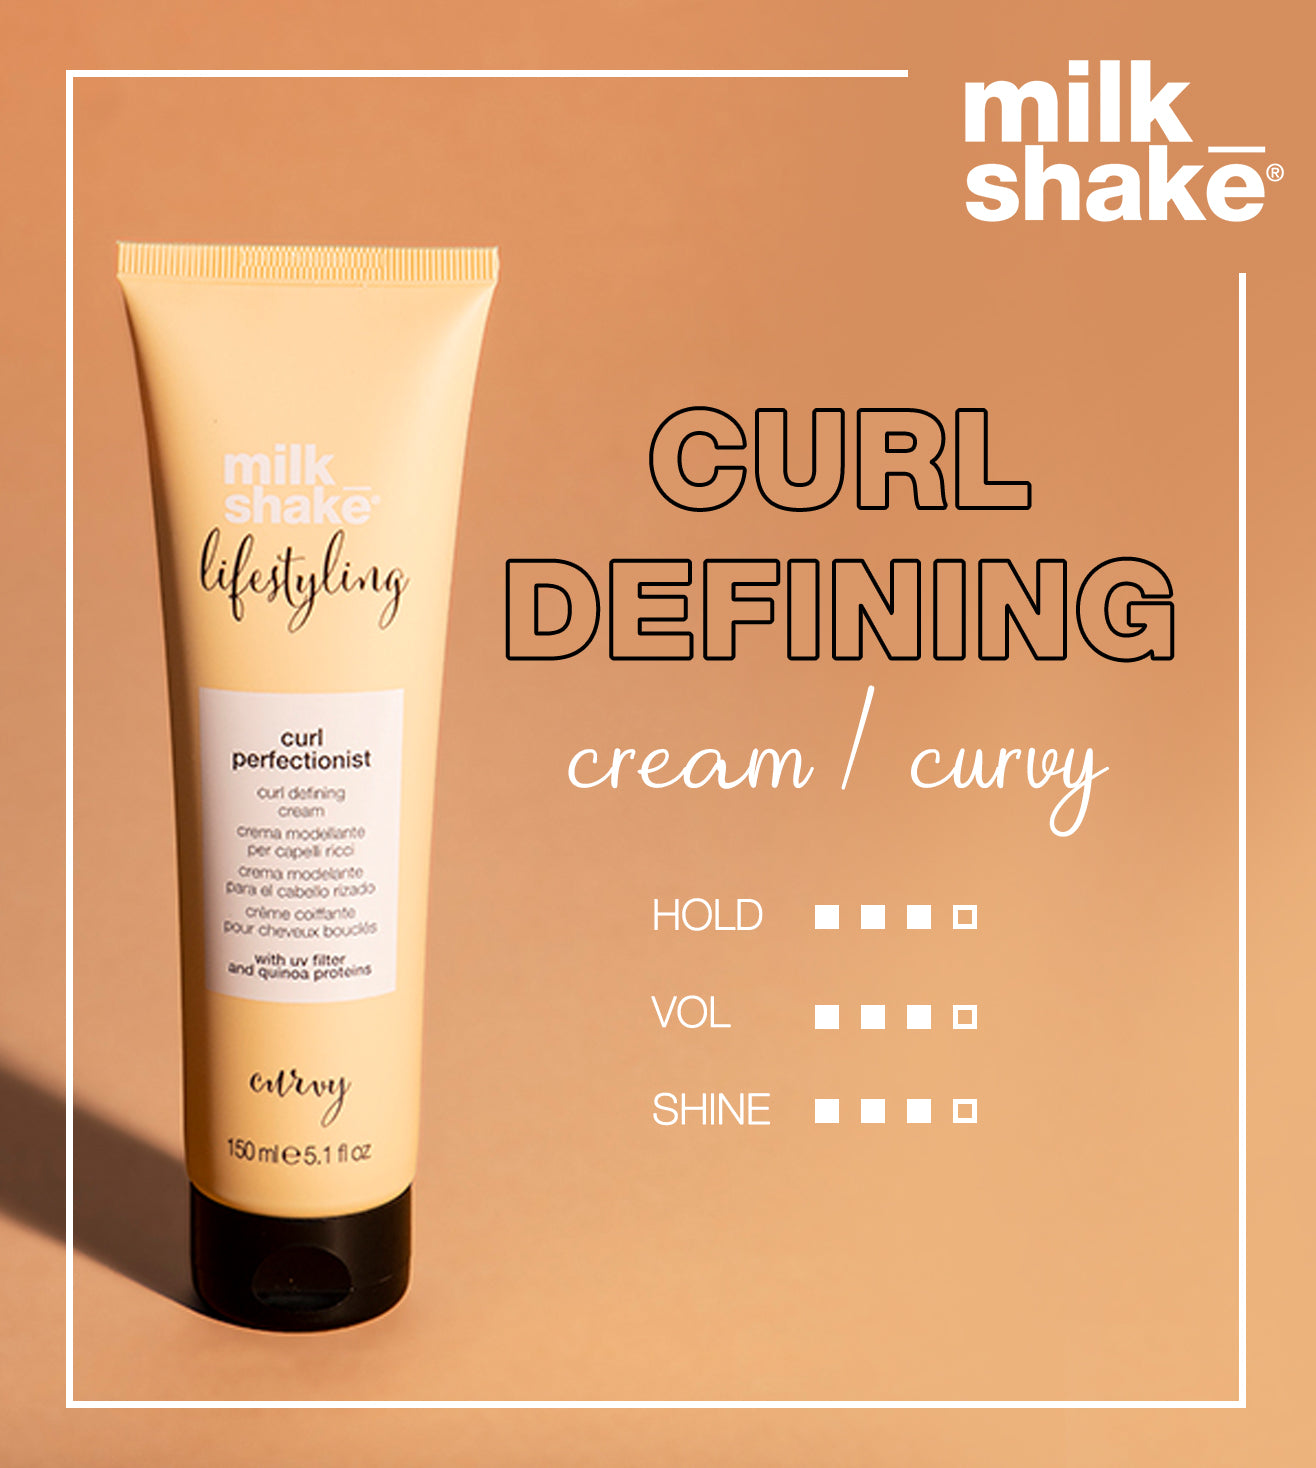 milk_shake® lifestyling curl perfectionist